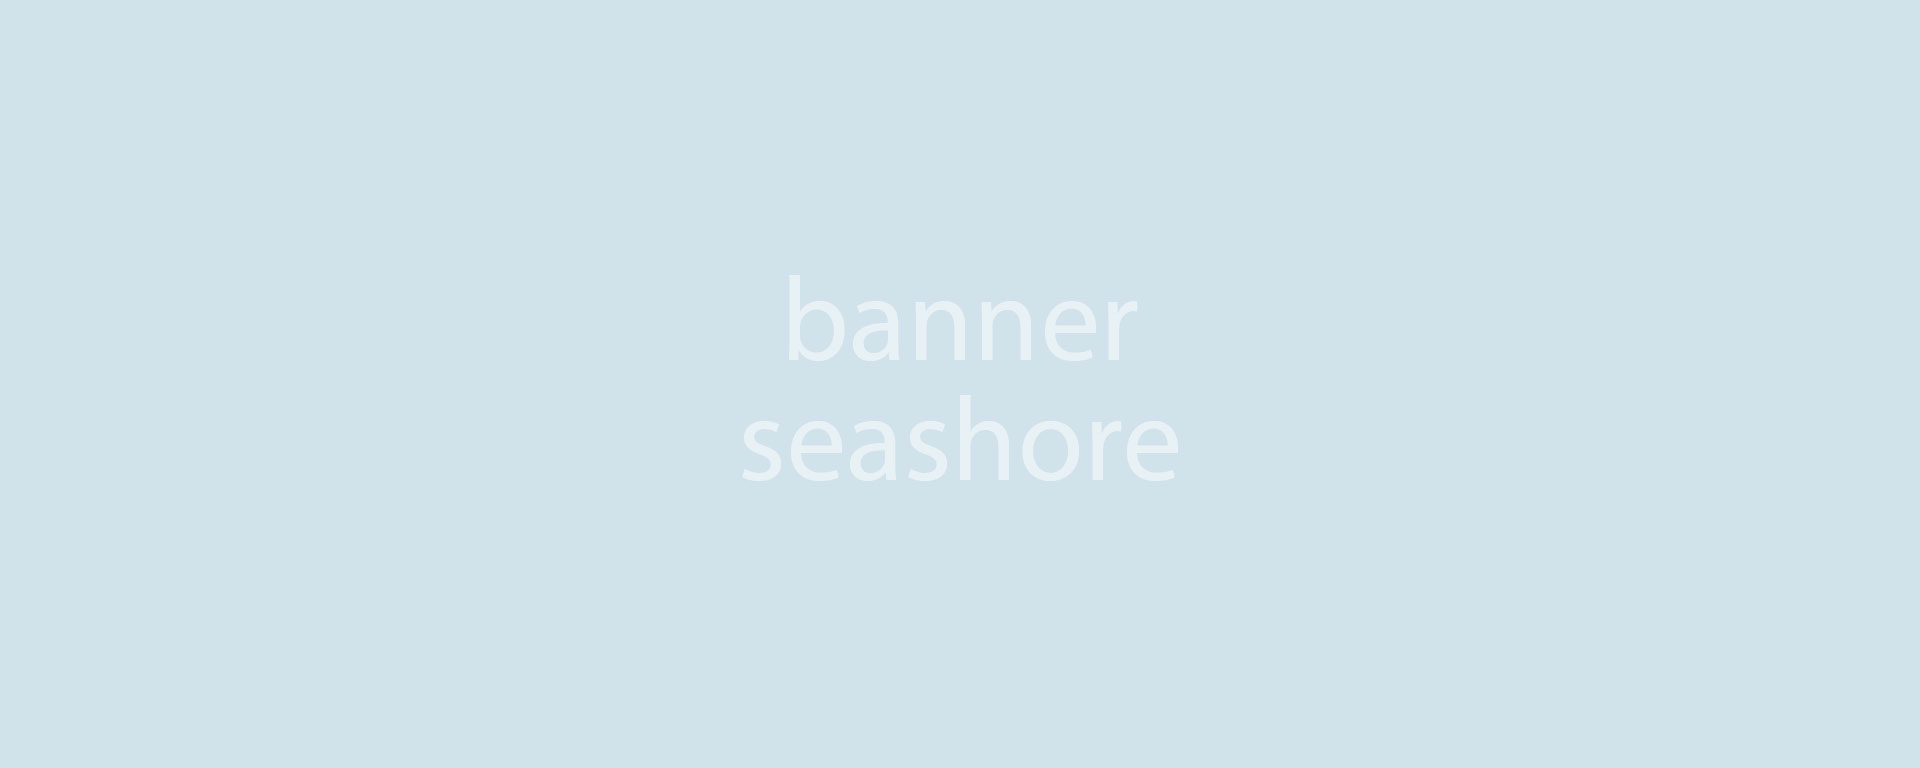 Seashore